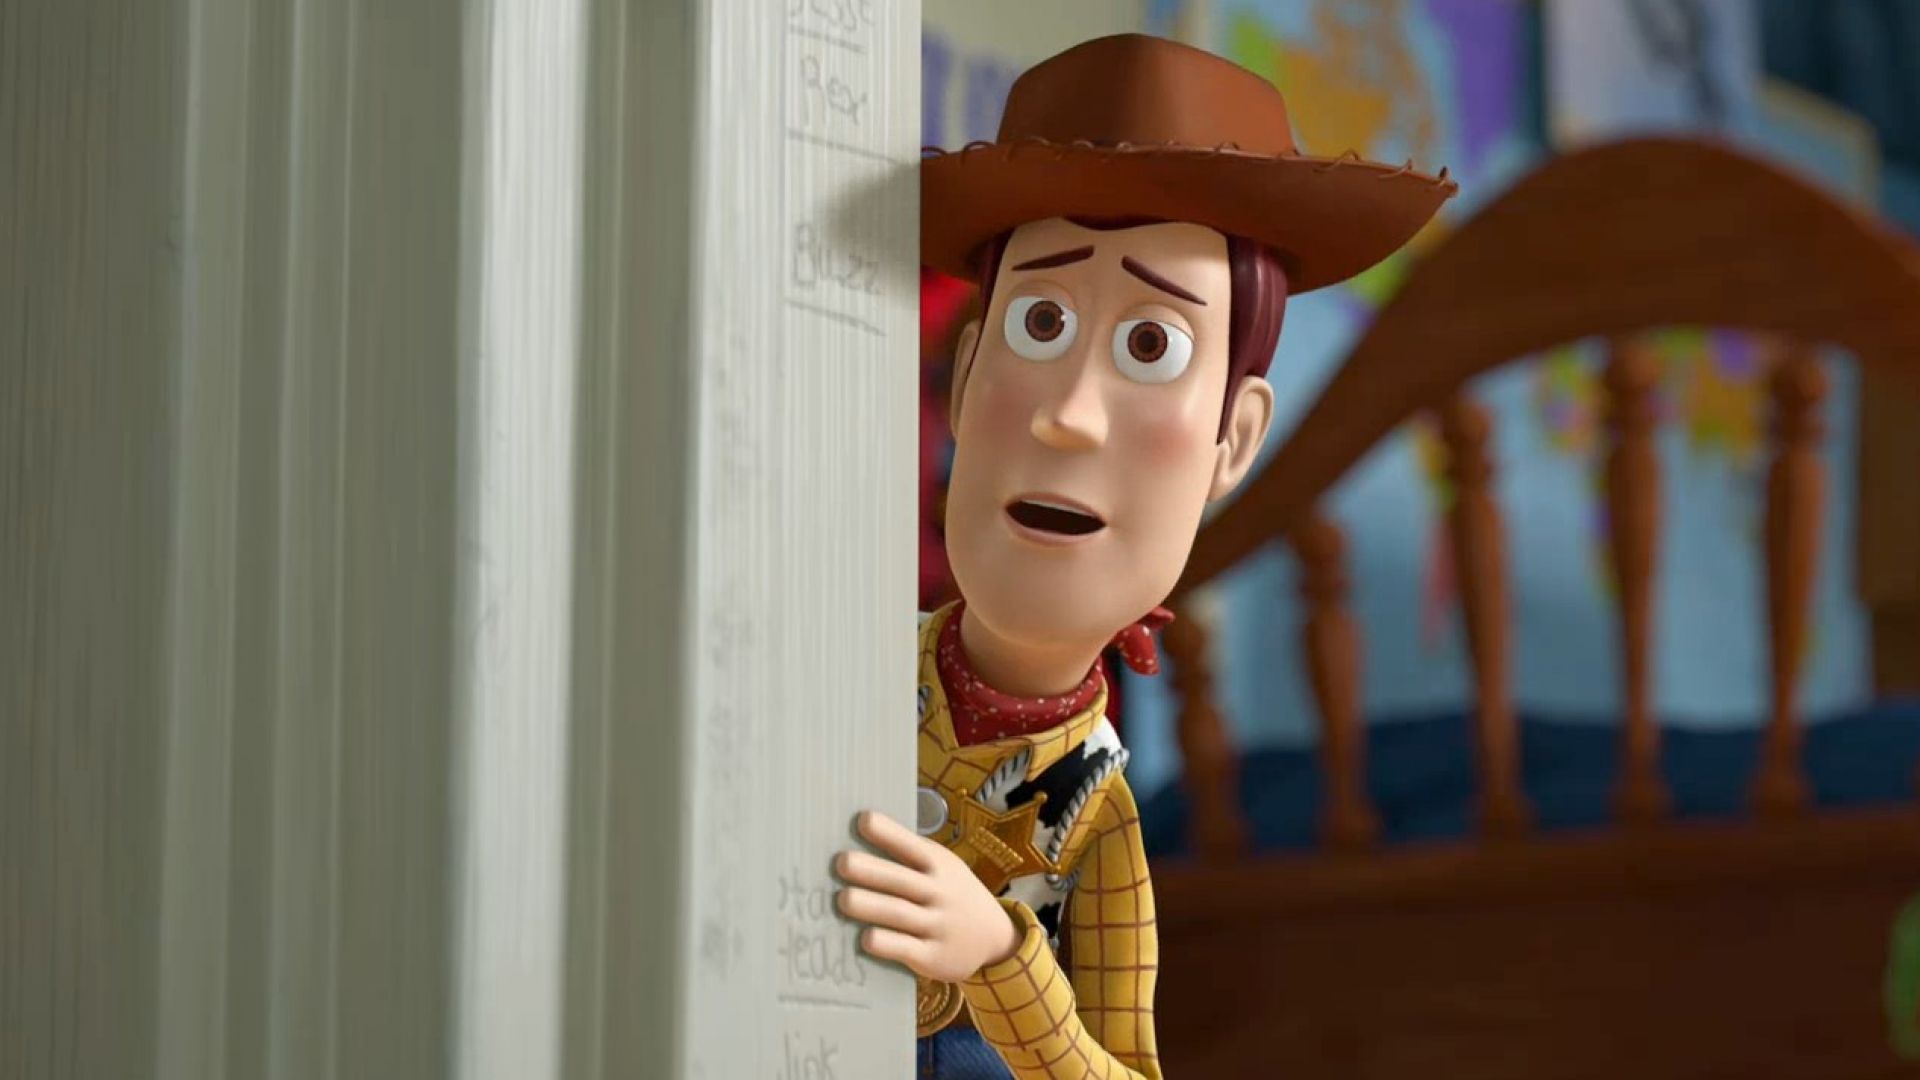 Sneak Peek at Toy Story 3